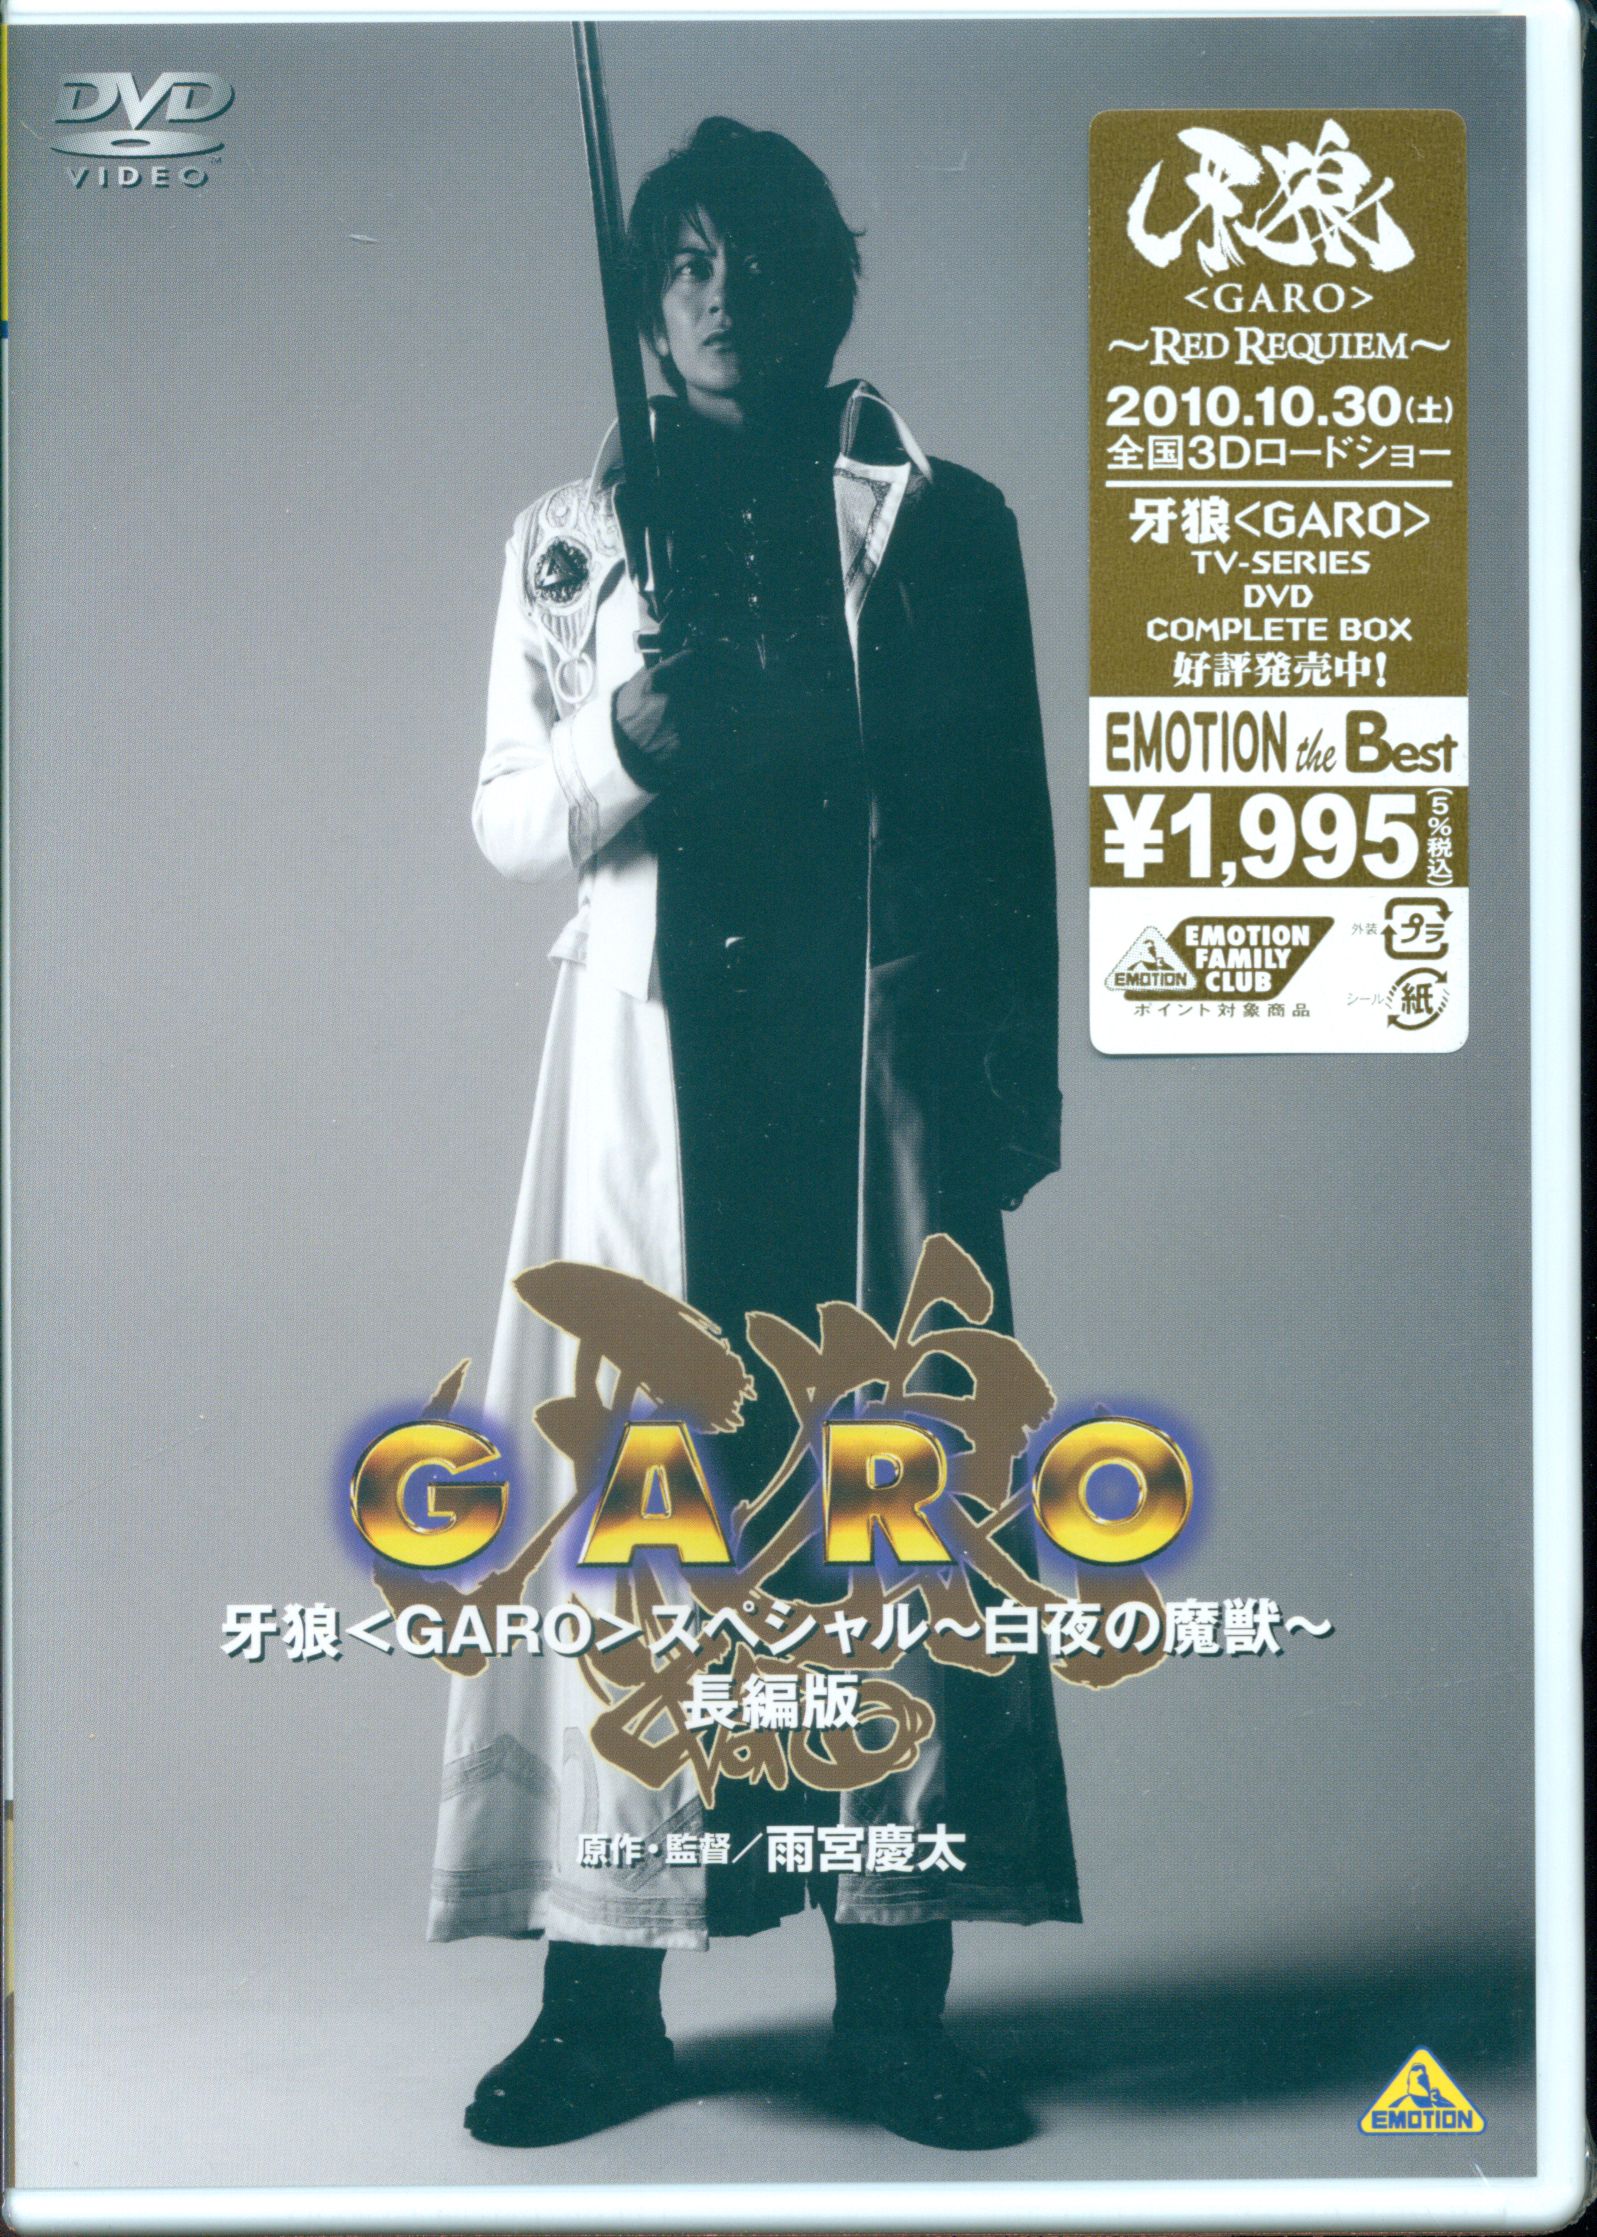 DVD EMOTION the Best 牙狼＜GARO＞TV-SERIES DVD COMPLETE BOX - DVD